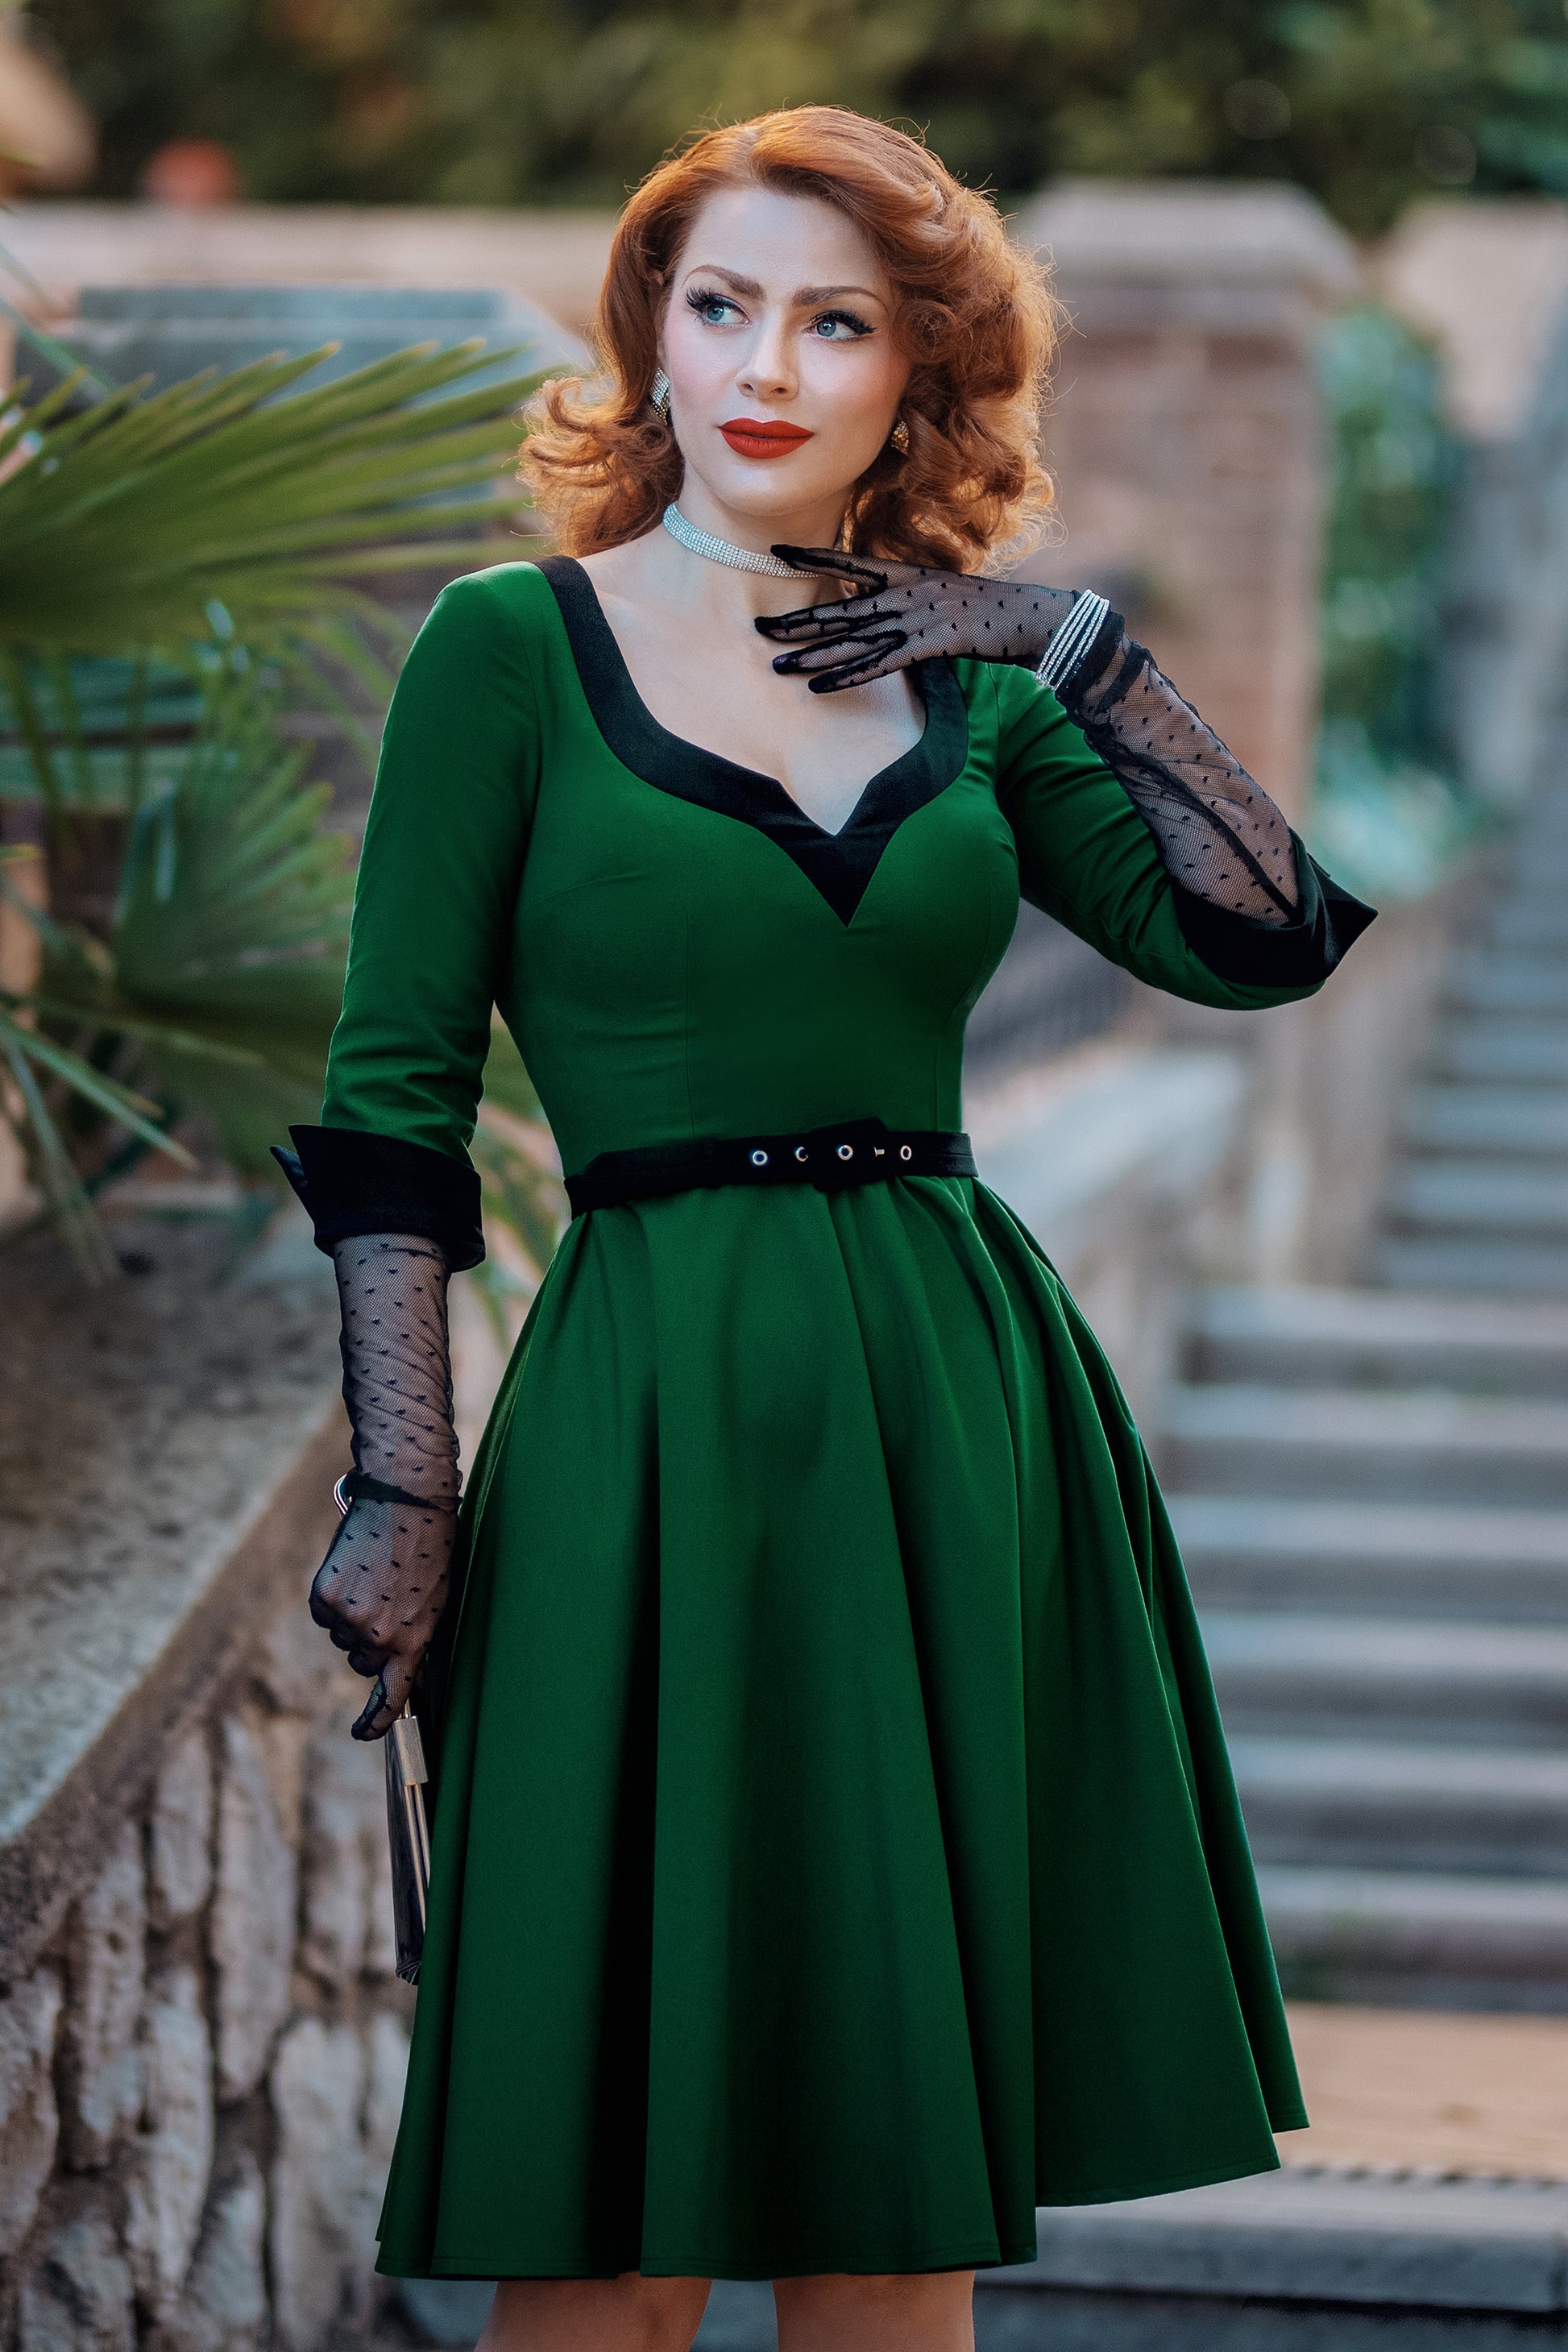 Vivienne Swing Dress in Hunter Green – Glamour Bunny